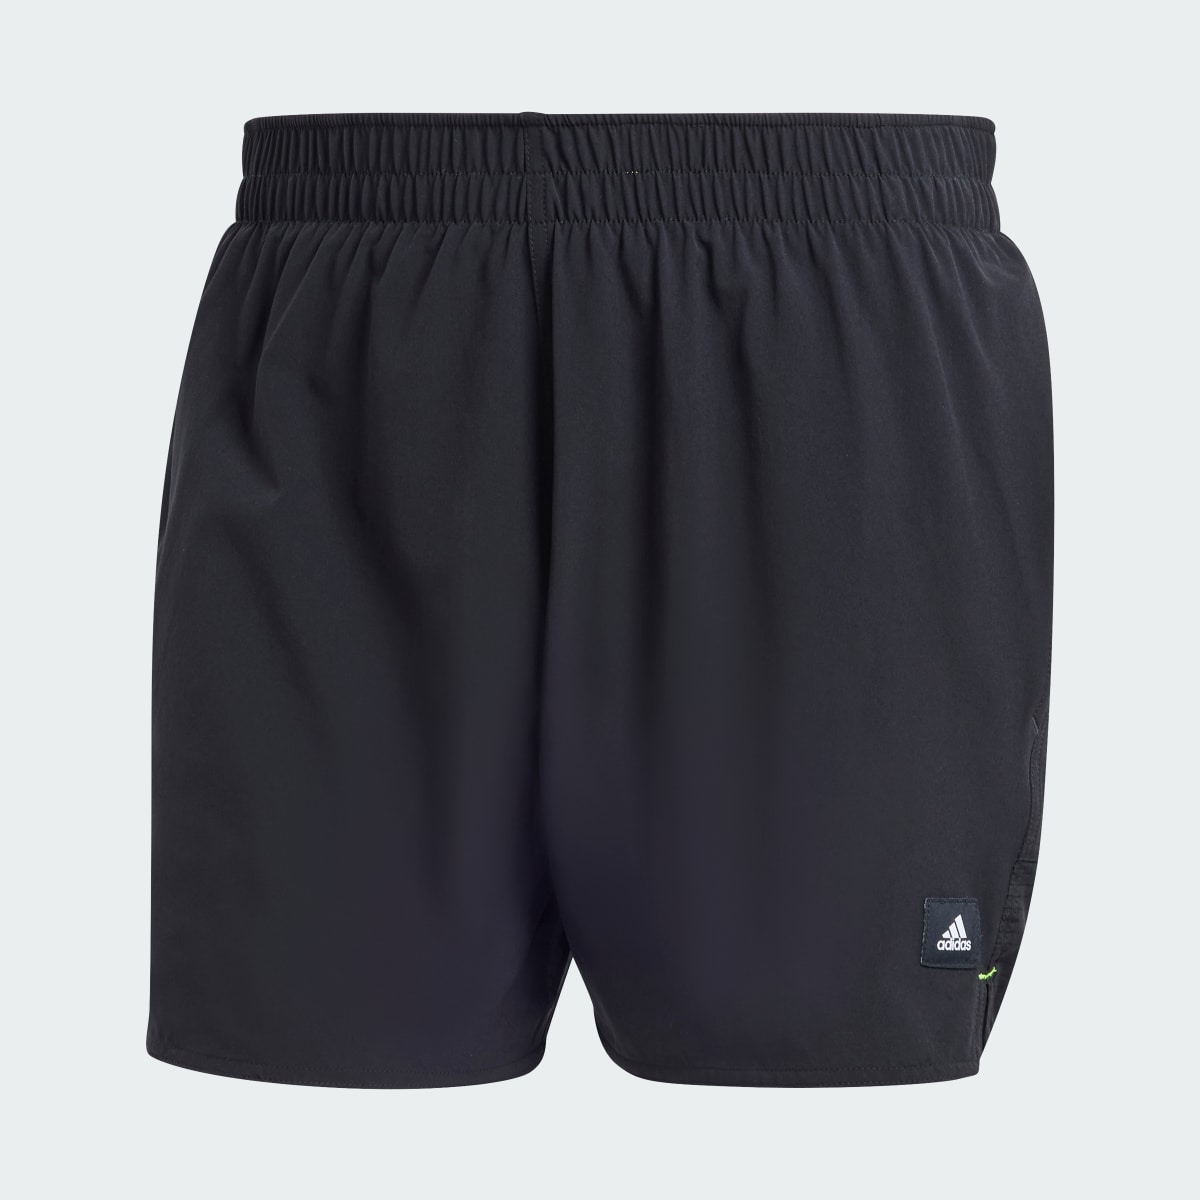 Adidas Versatile Swim Shorts. 5